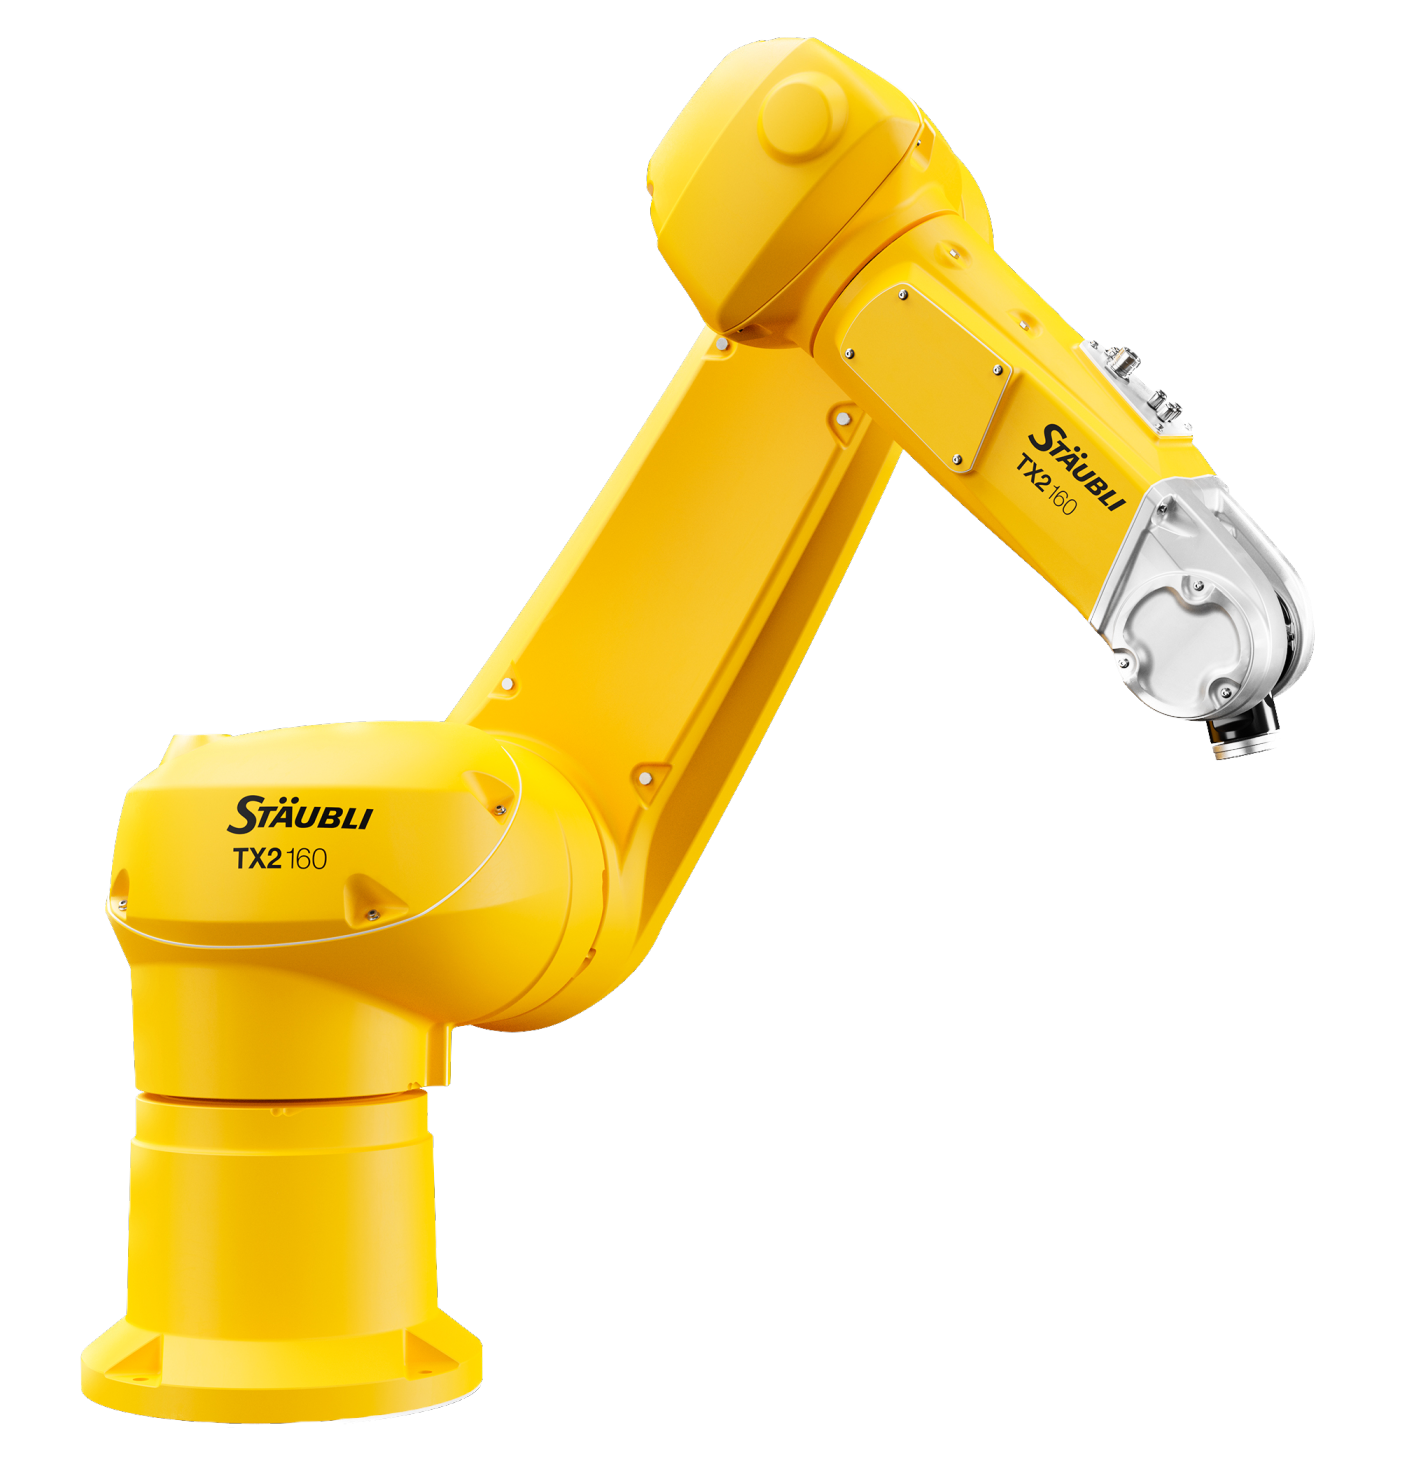 Industrial Robot Staubli TX2-160